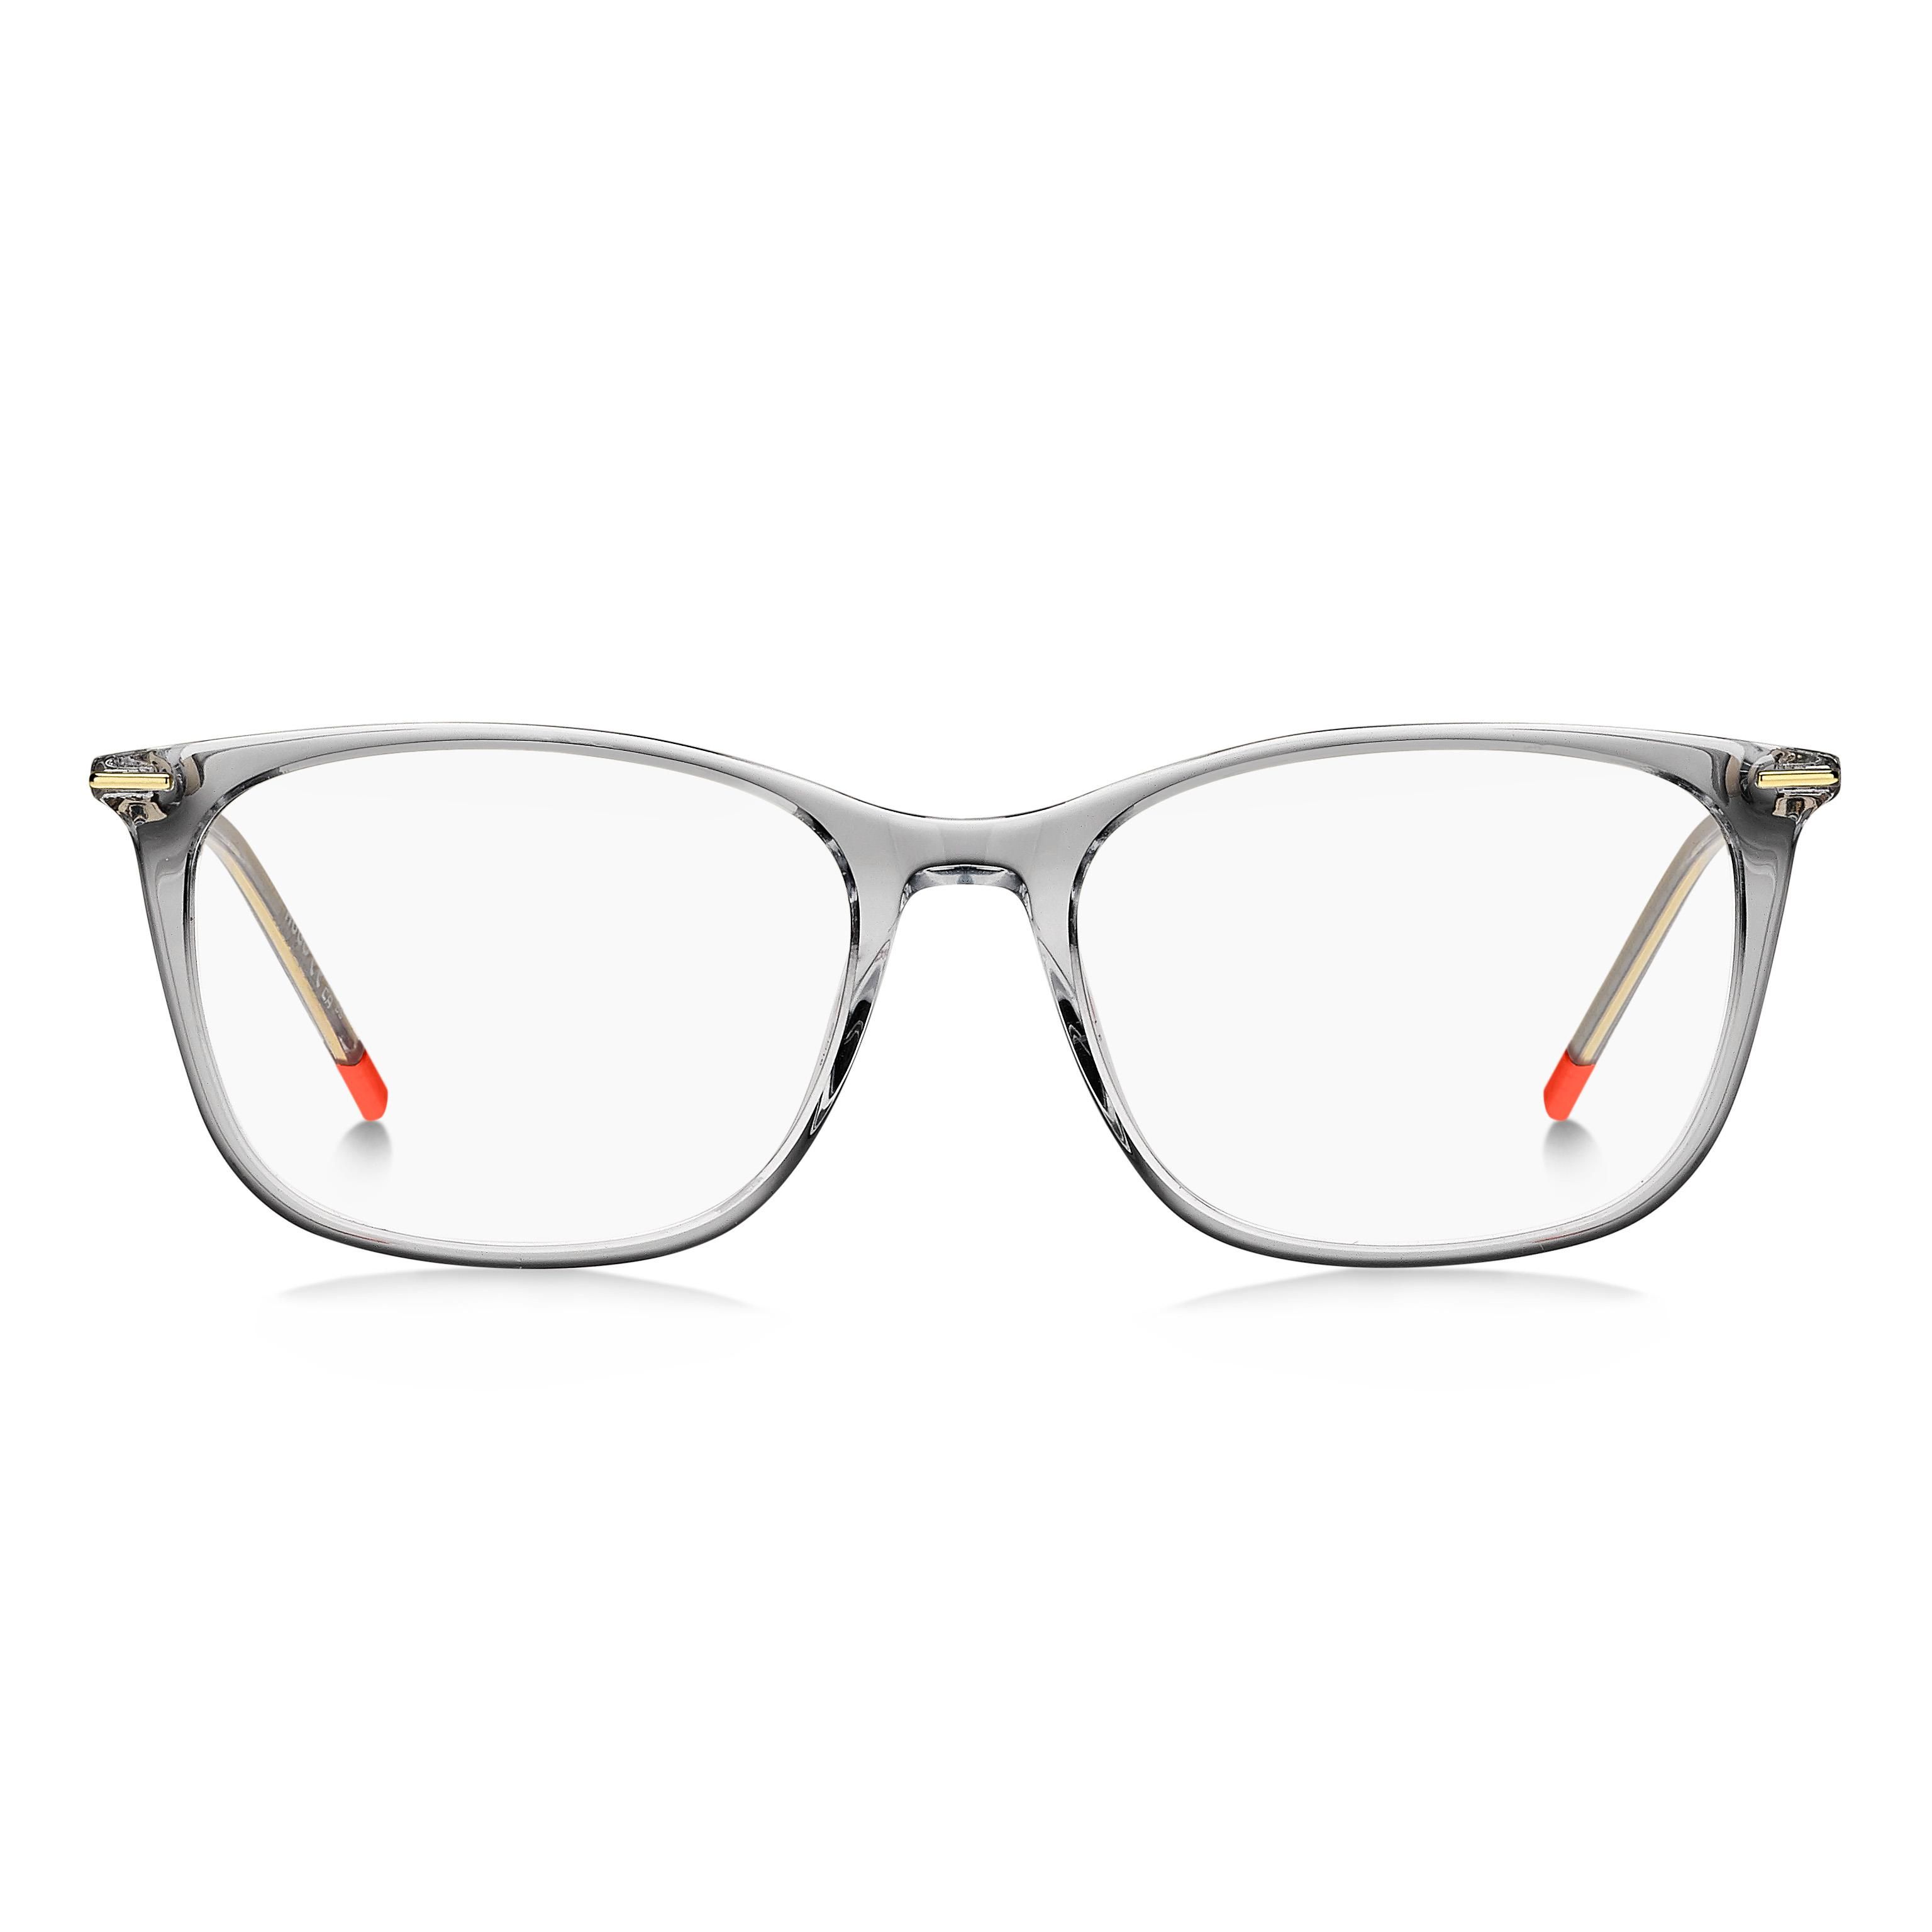 HG 1278 Square Eyeglasses KB7 - size 52